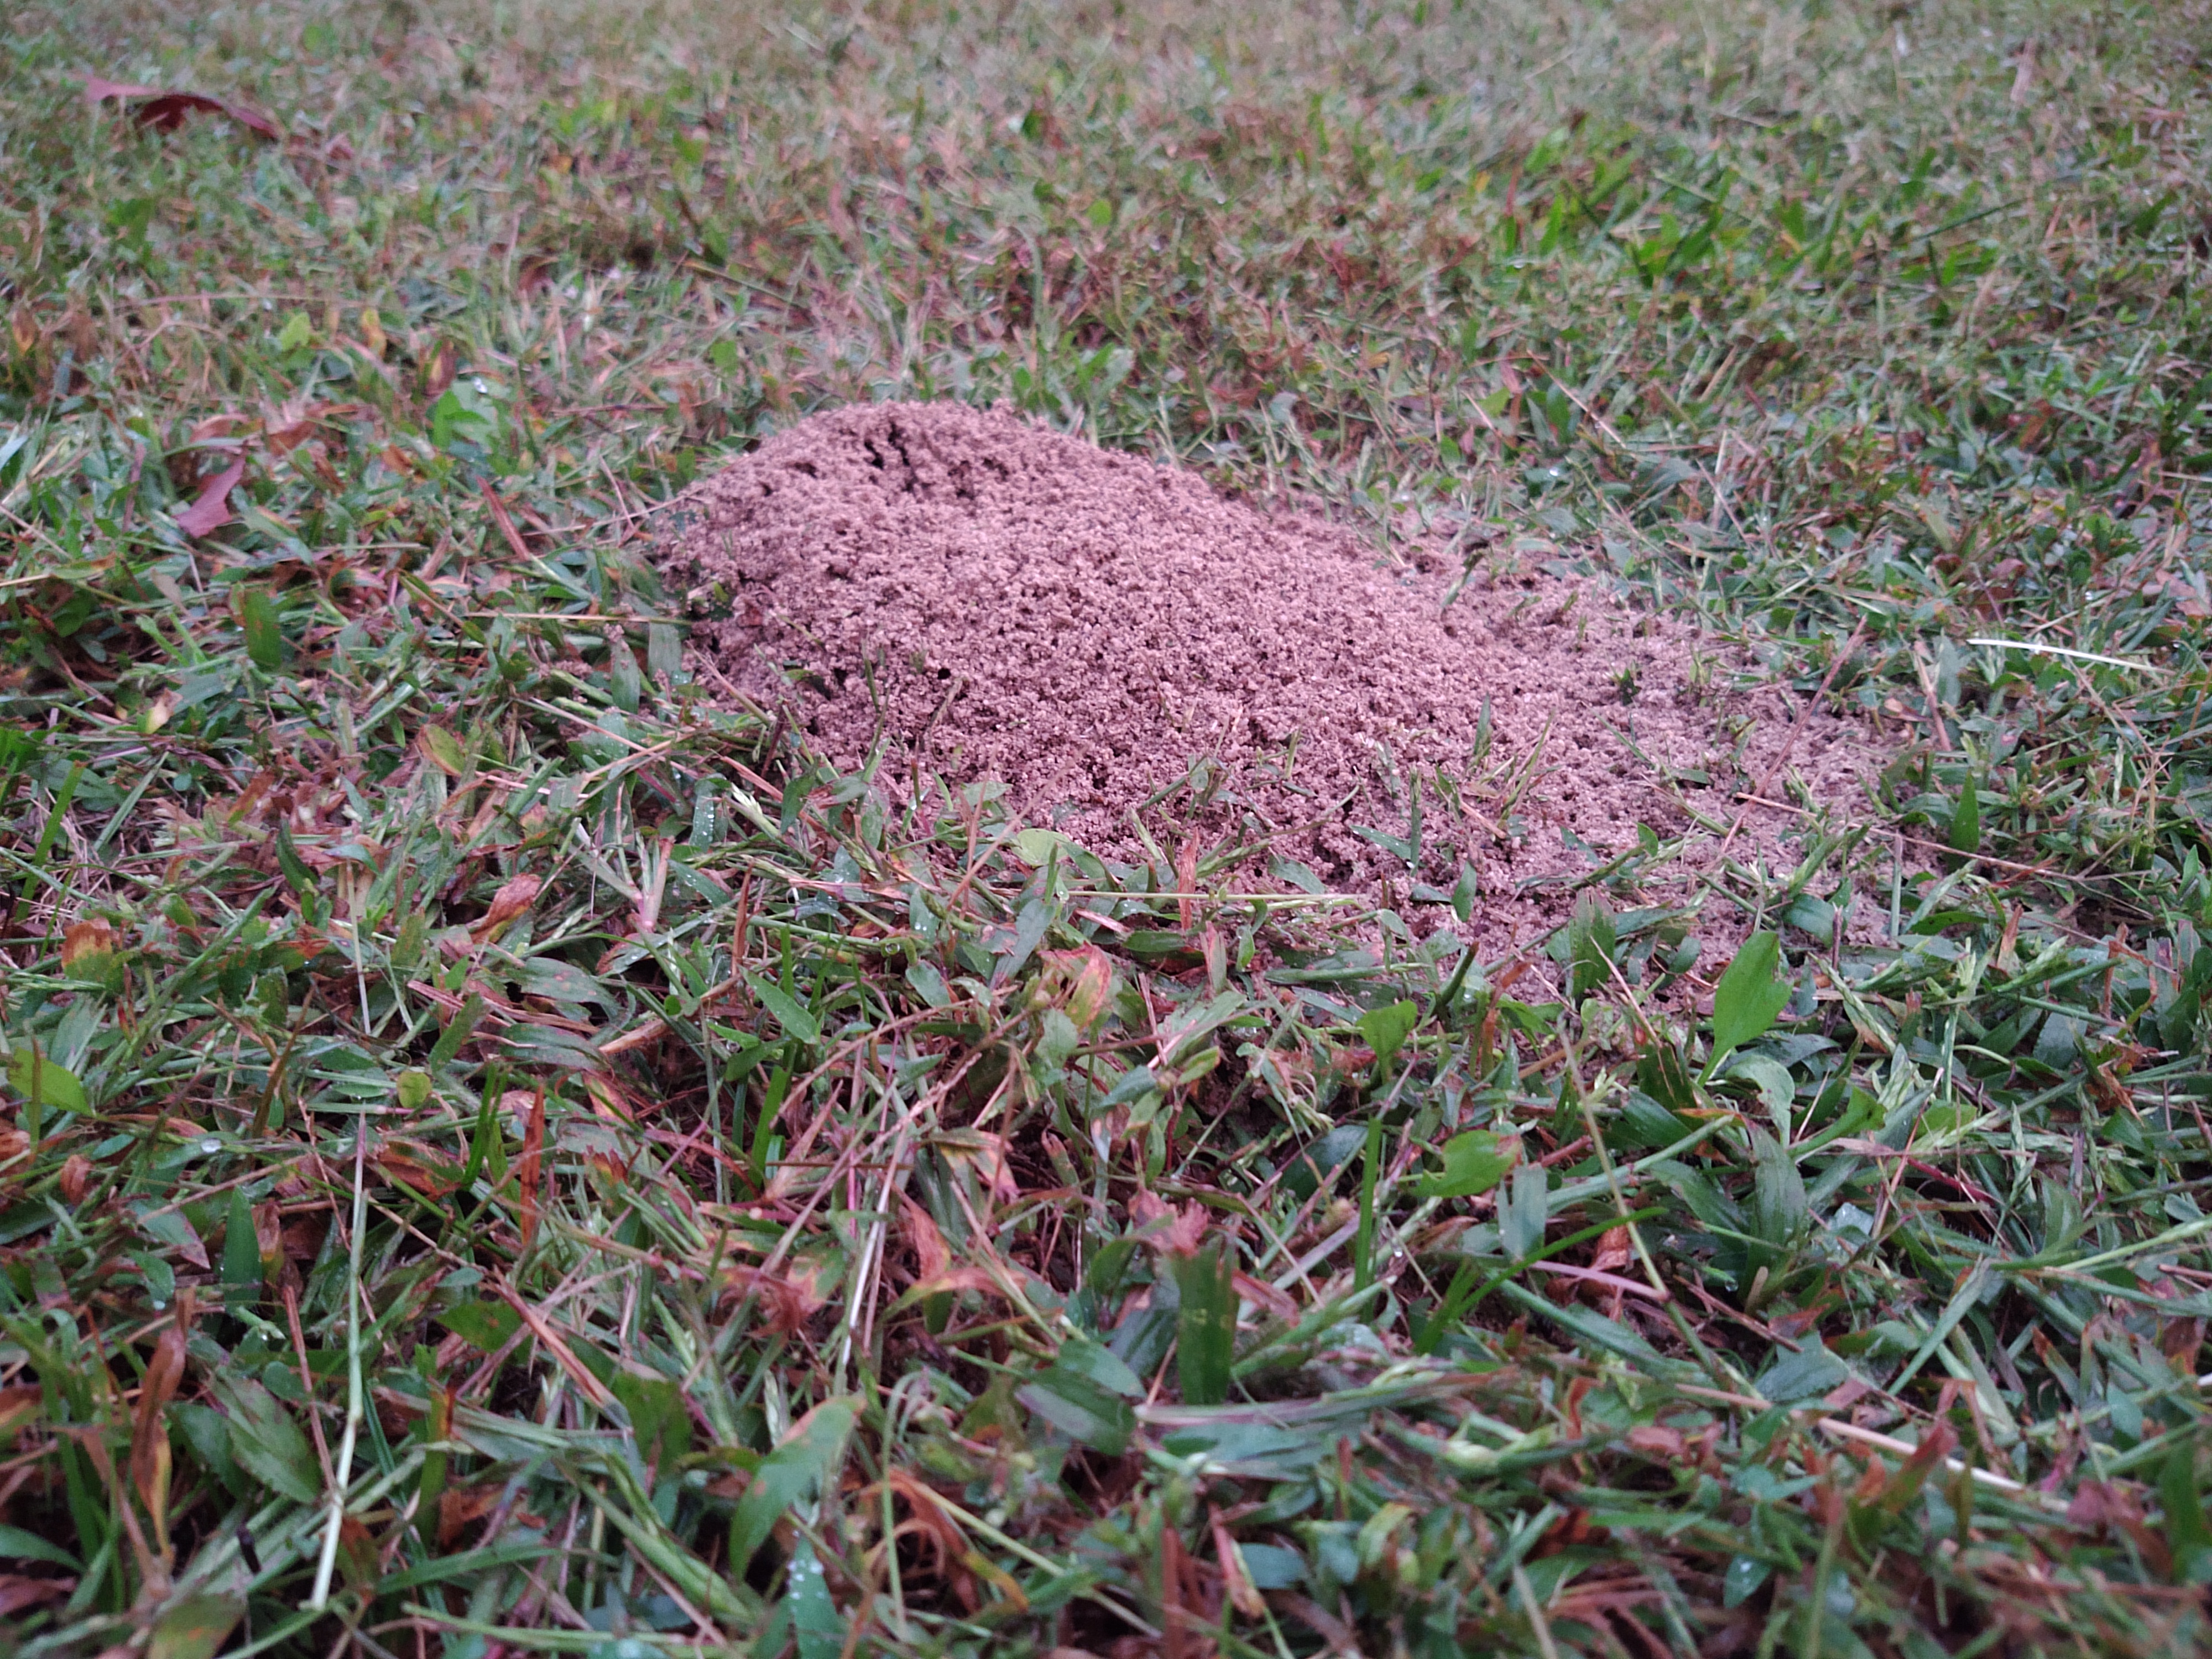 Reddish fire ant mound in green grass